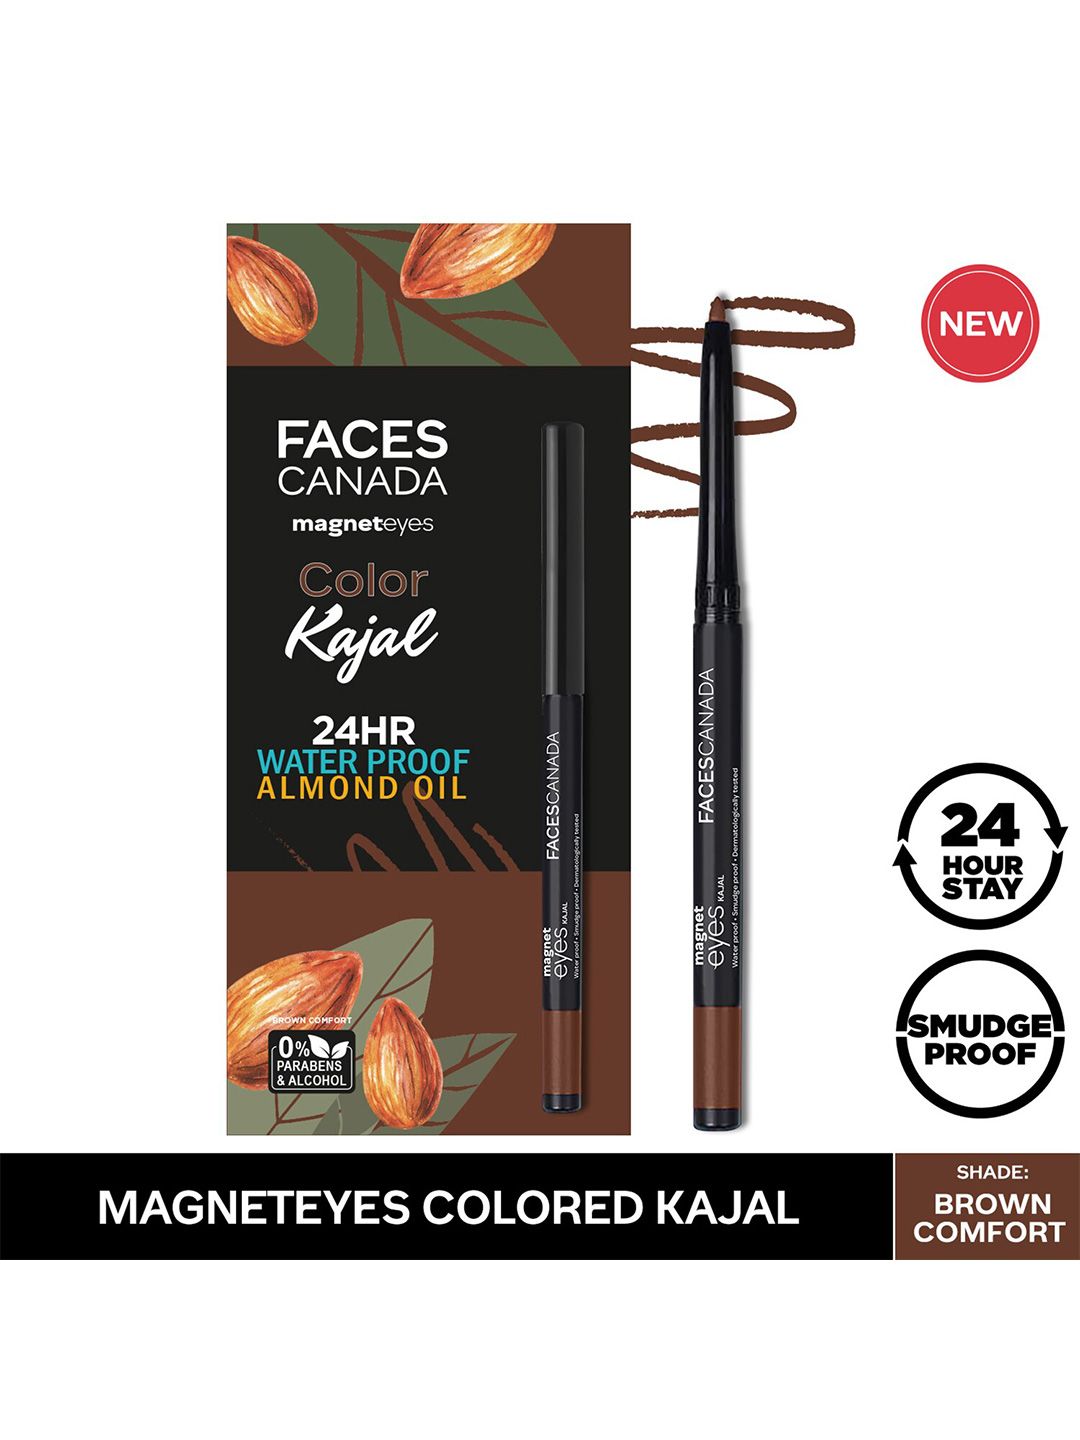 FACES CANADA Magneteyes Waterproof Color Kajal - Brown Comfort 03 Price in India